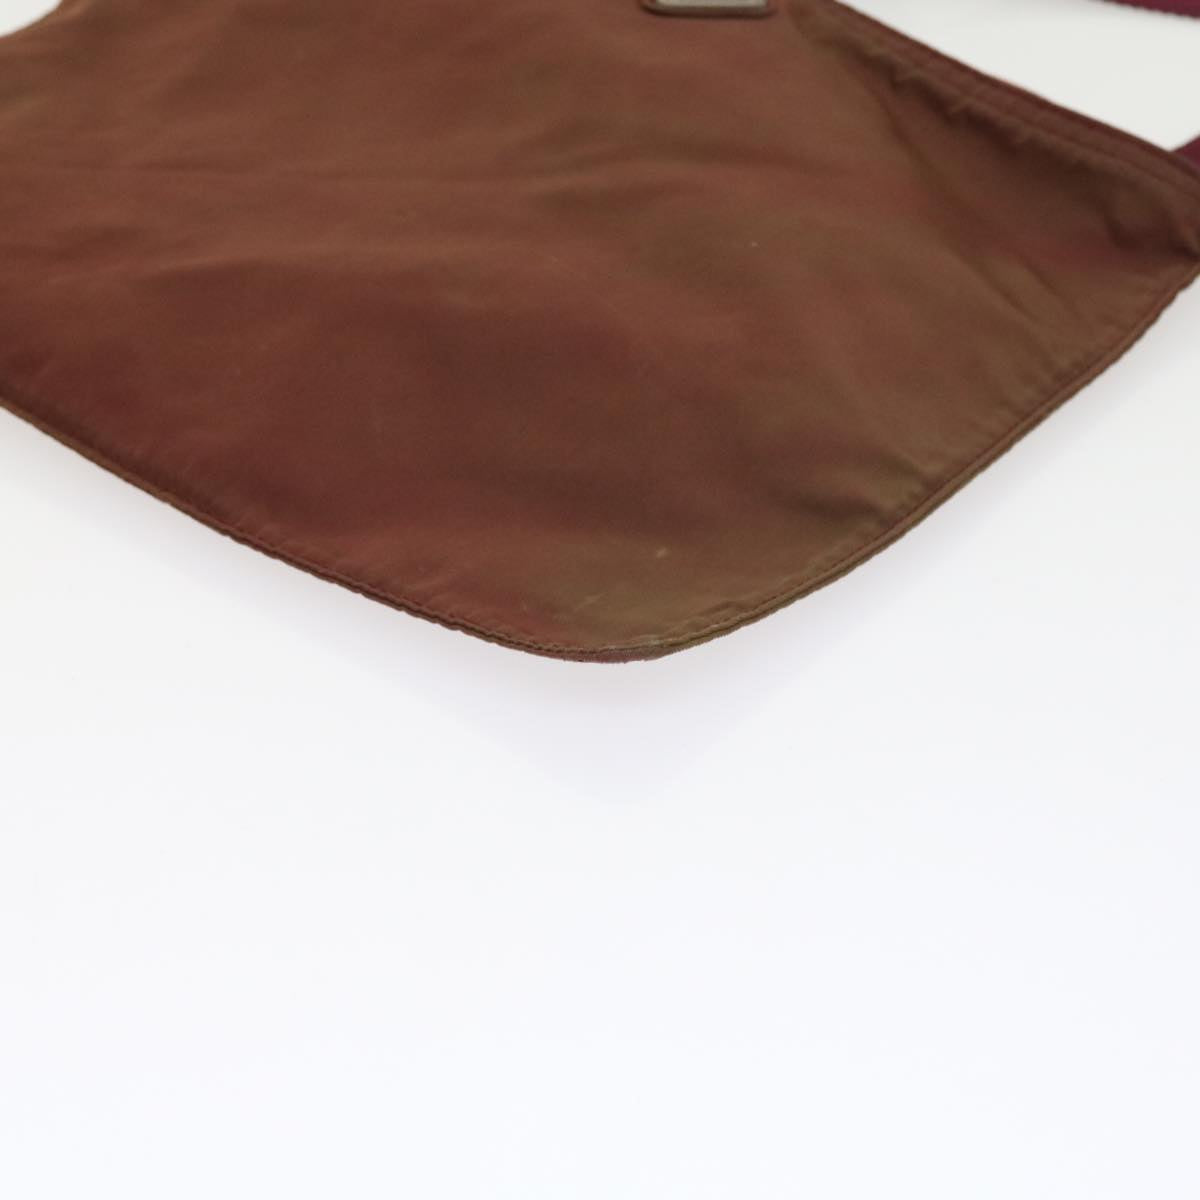 PRADA Shoulder Bag Nylon Bordeaux Auth 54348